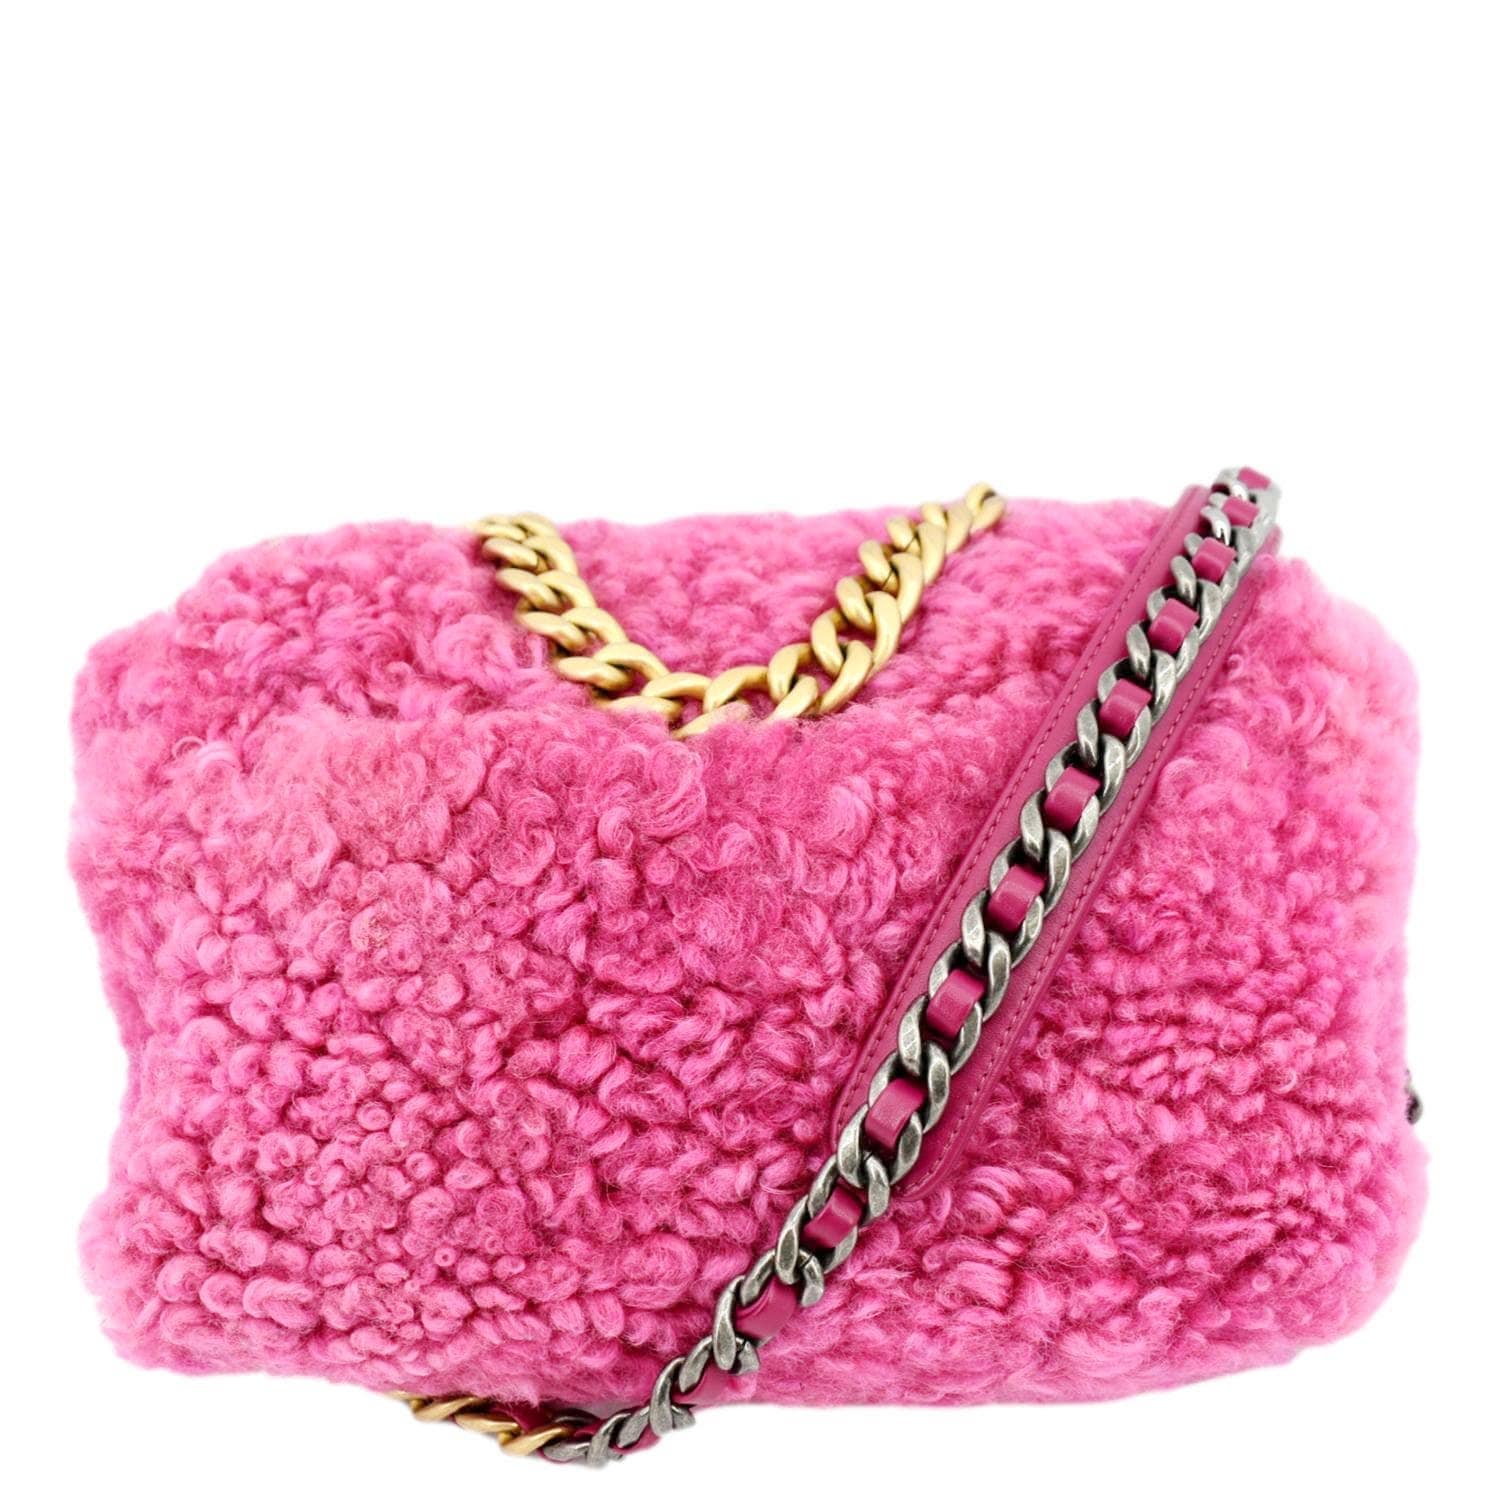 Chanel 19 Neon Pink Handbag